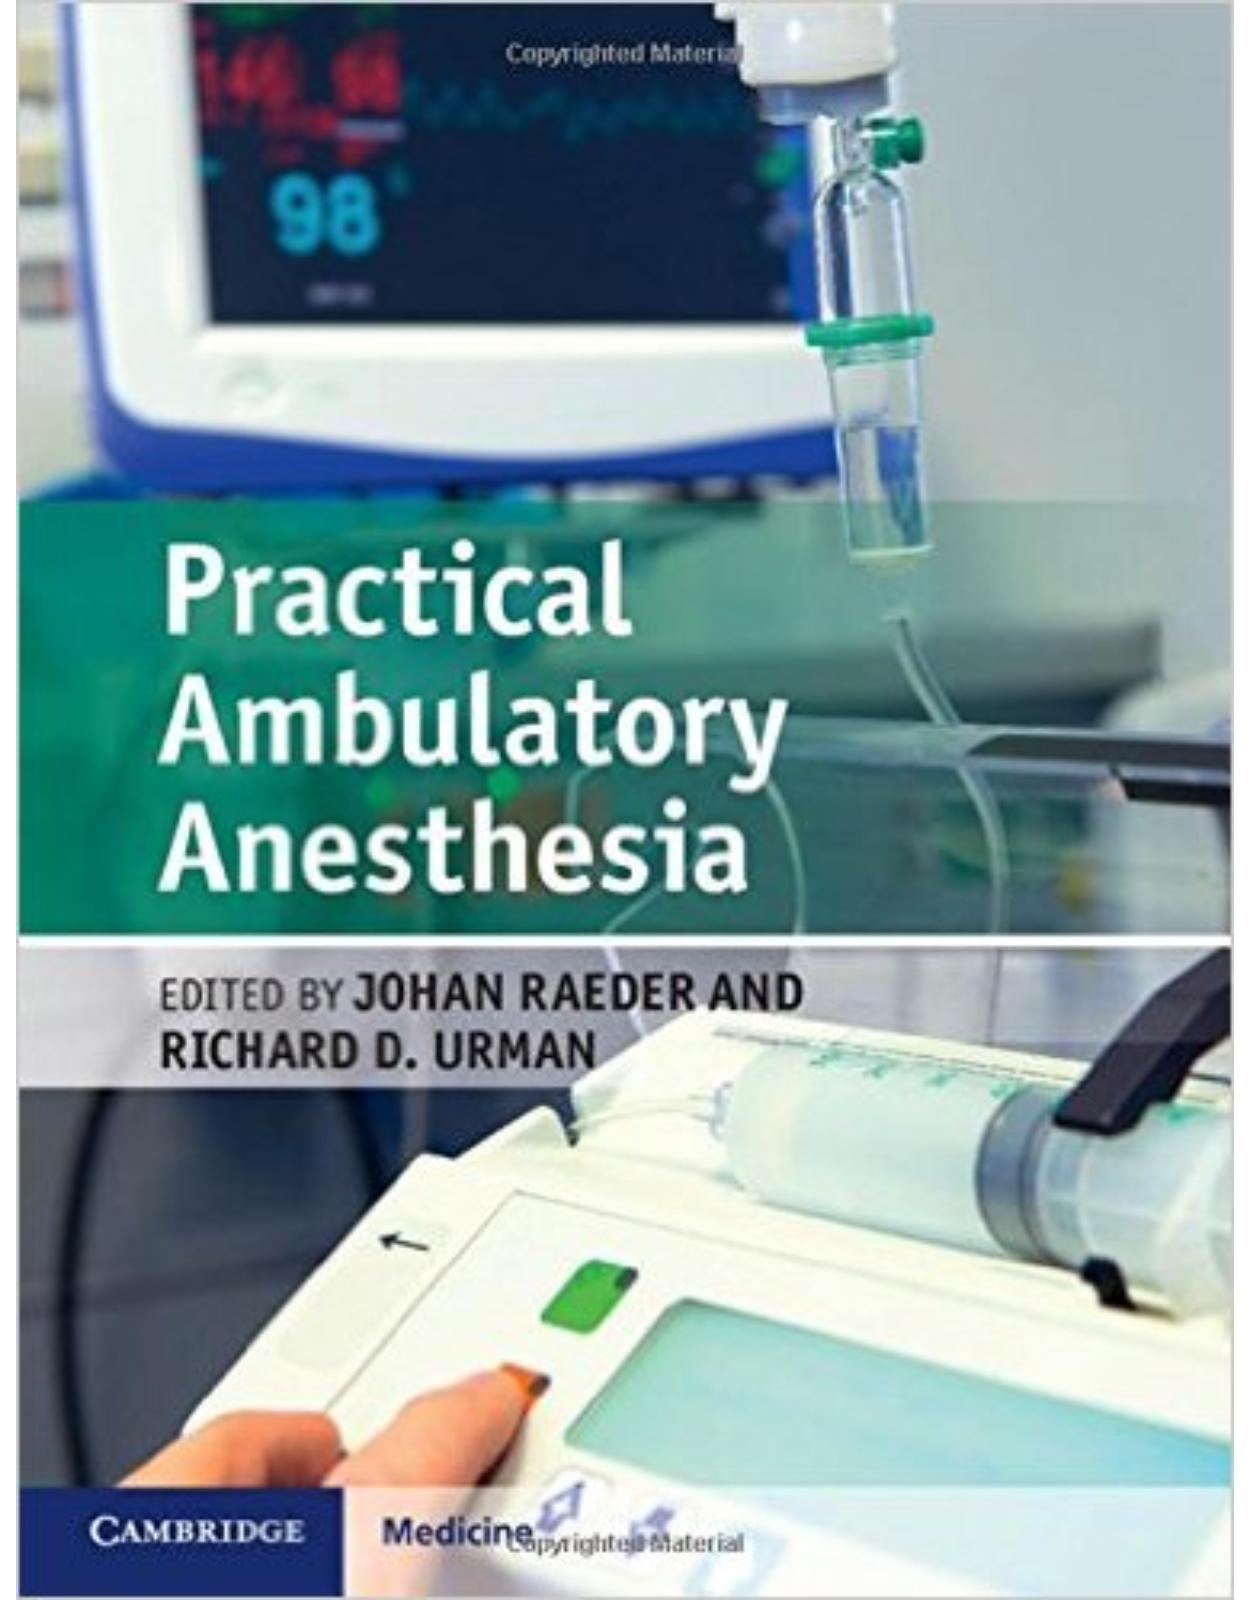 Practical Ambulatory Anesthesia